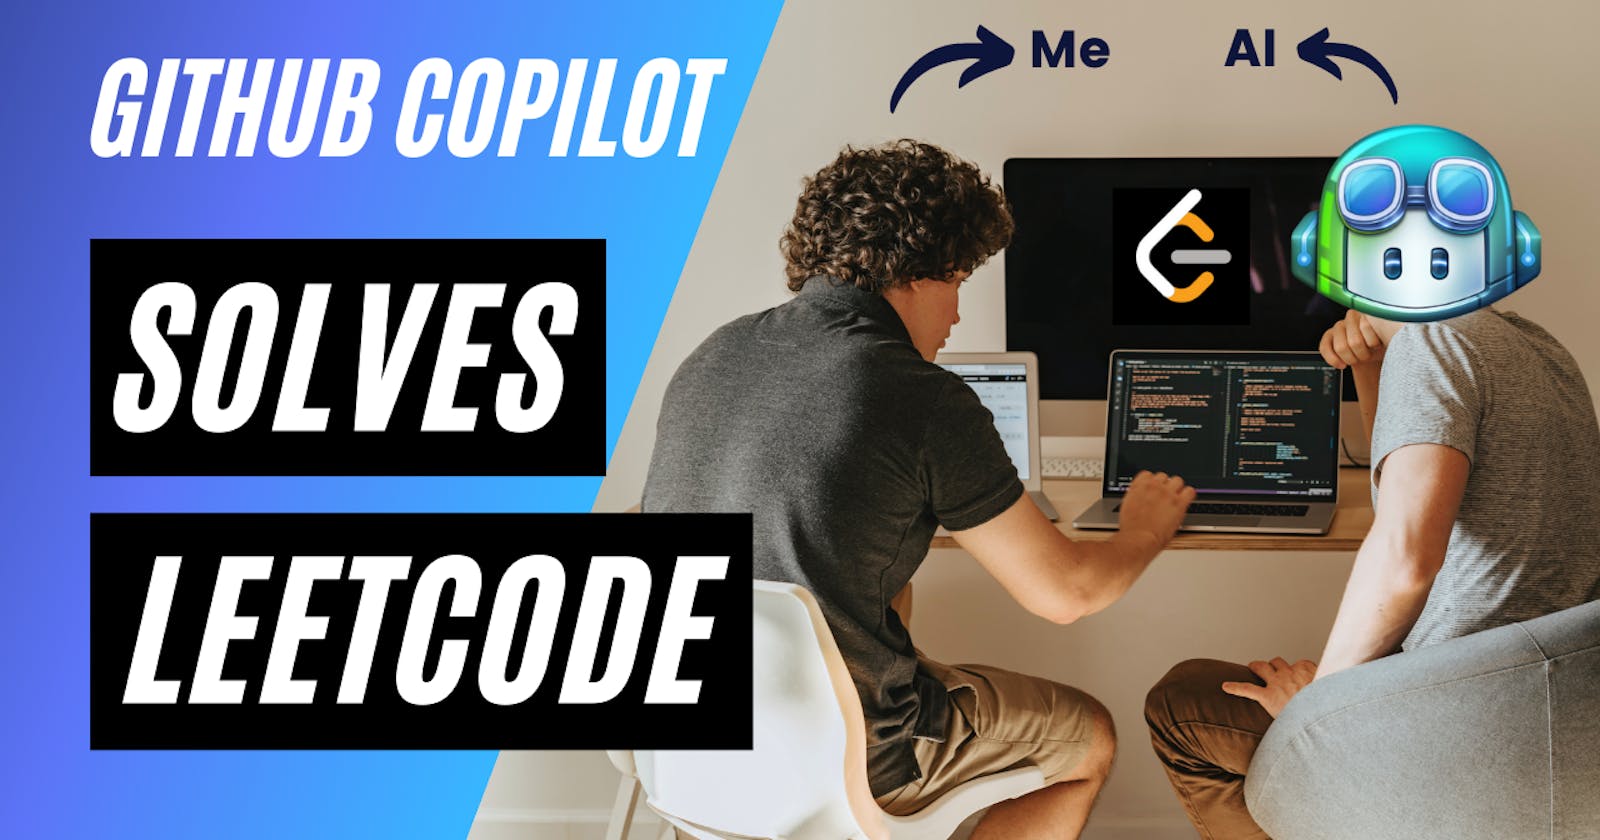 GitHub Copilot solves LeetCode problems. How?